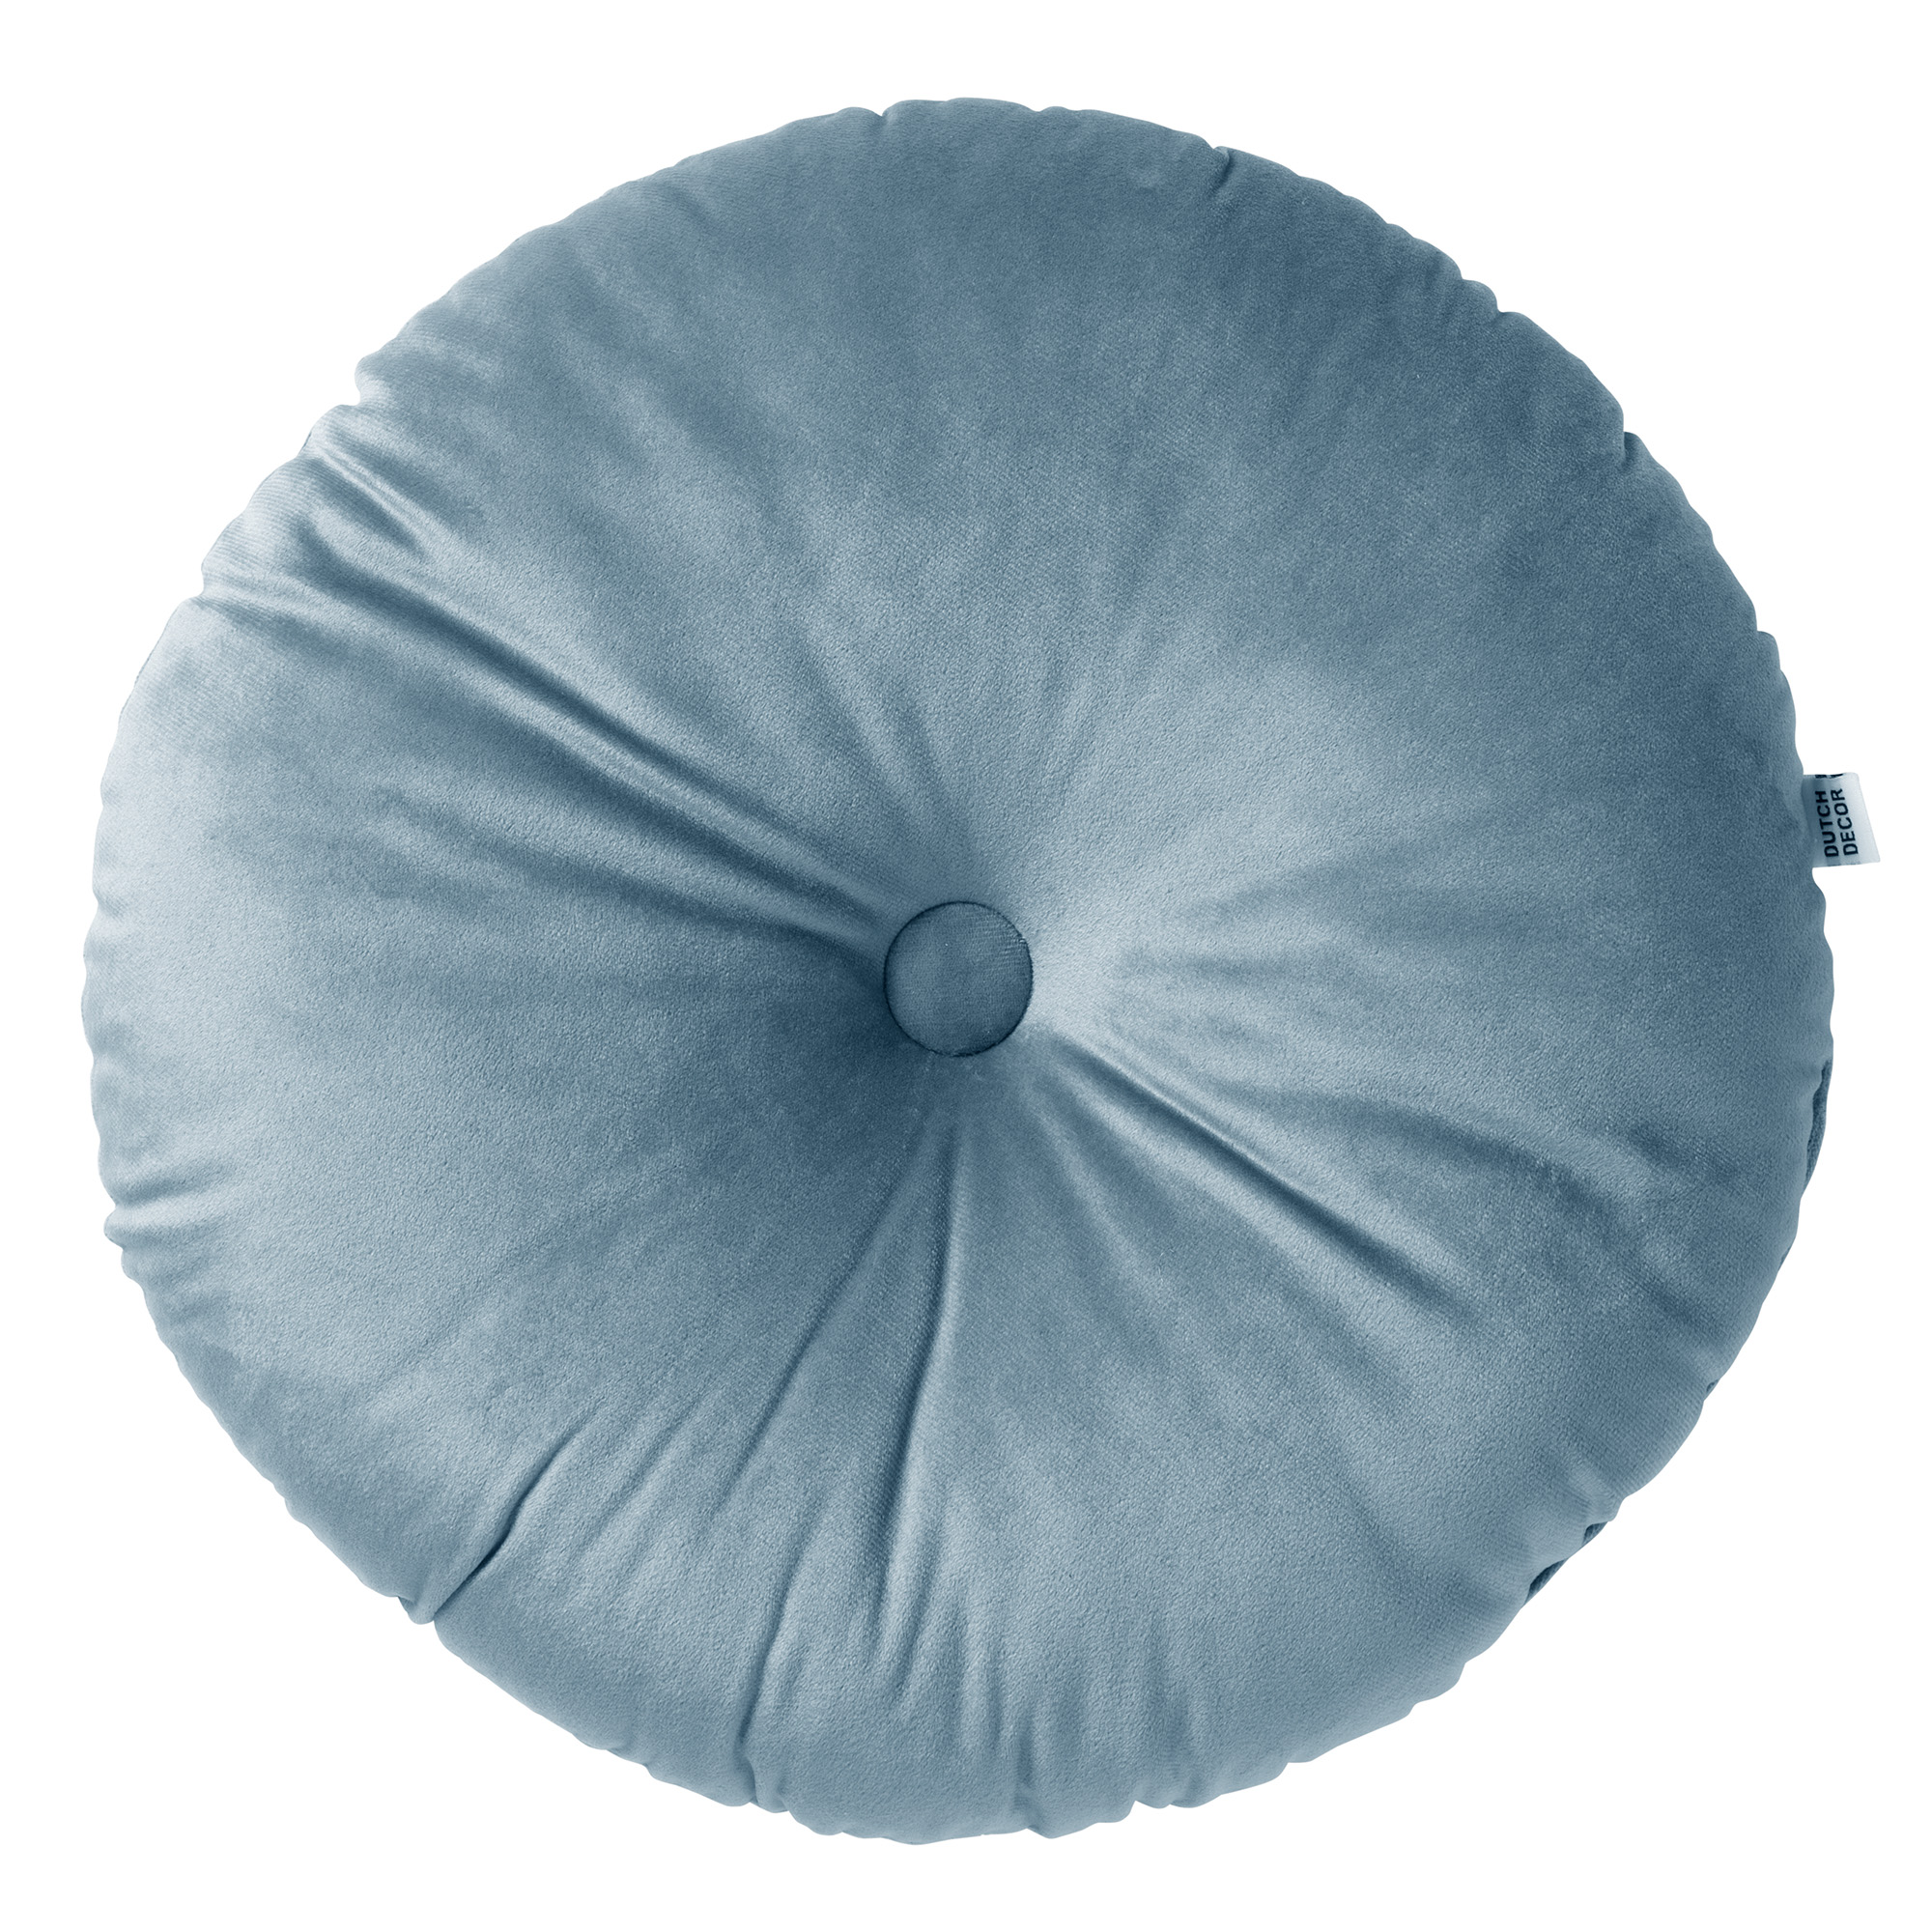 OLLY - Sierkussen rond velvet 40 cm - Provincial Blue - lichtblauw